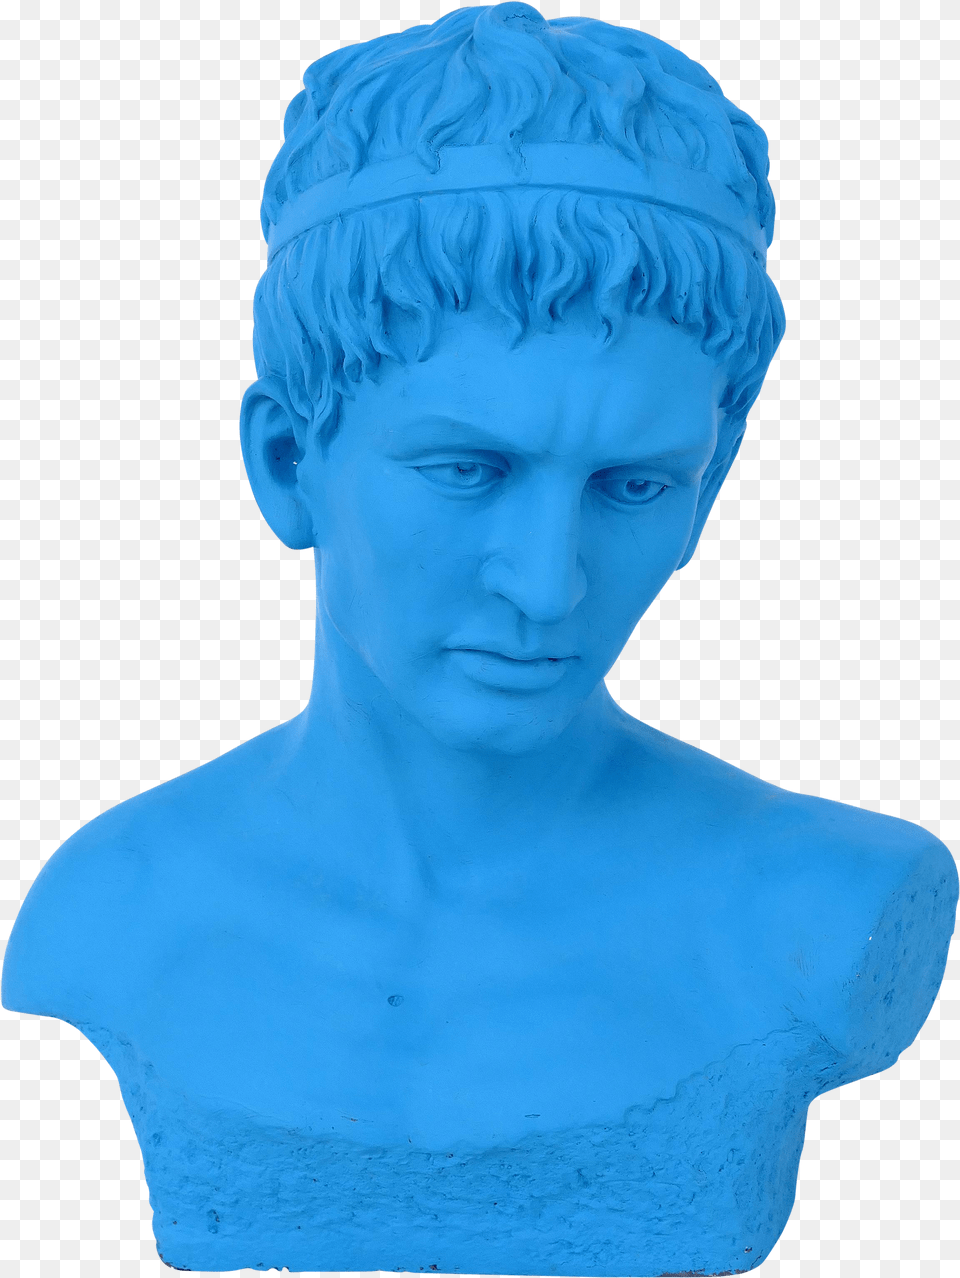 Vintage Turquoise Blue Bust Of The Roman Emperor Augustus Caesar Hair Design Free Transparent Png